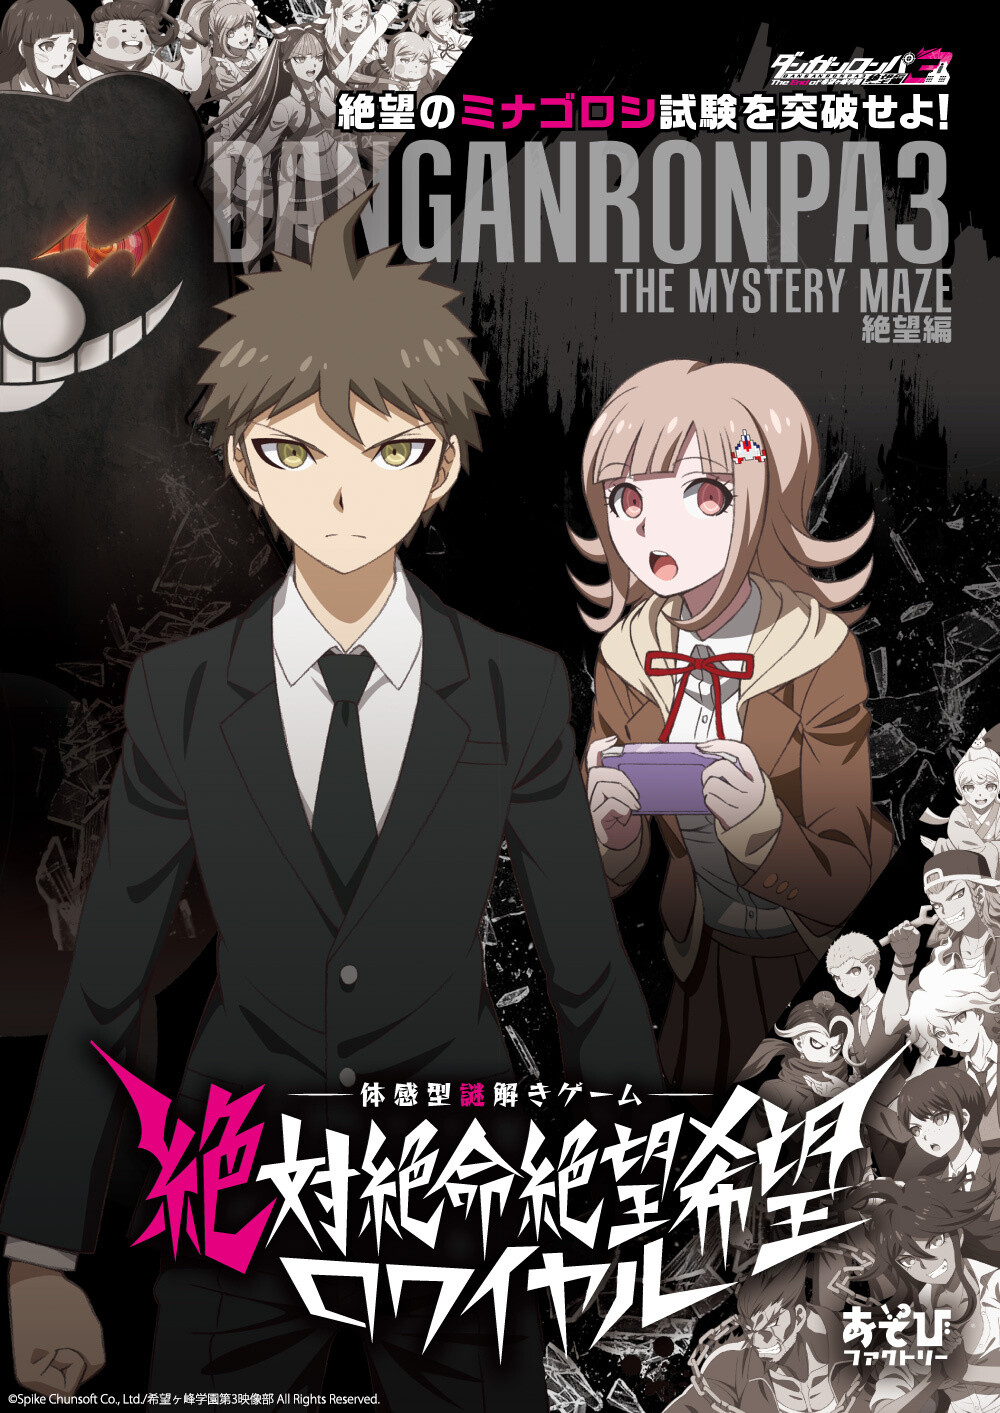 Danganronpa 3 is an anime, new Danganronpa game also coming – Destructoid